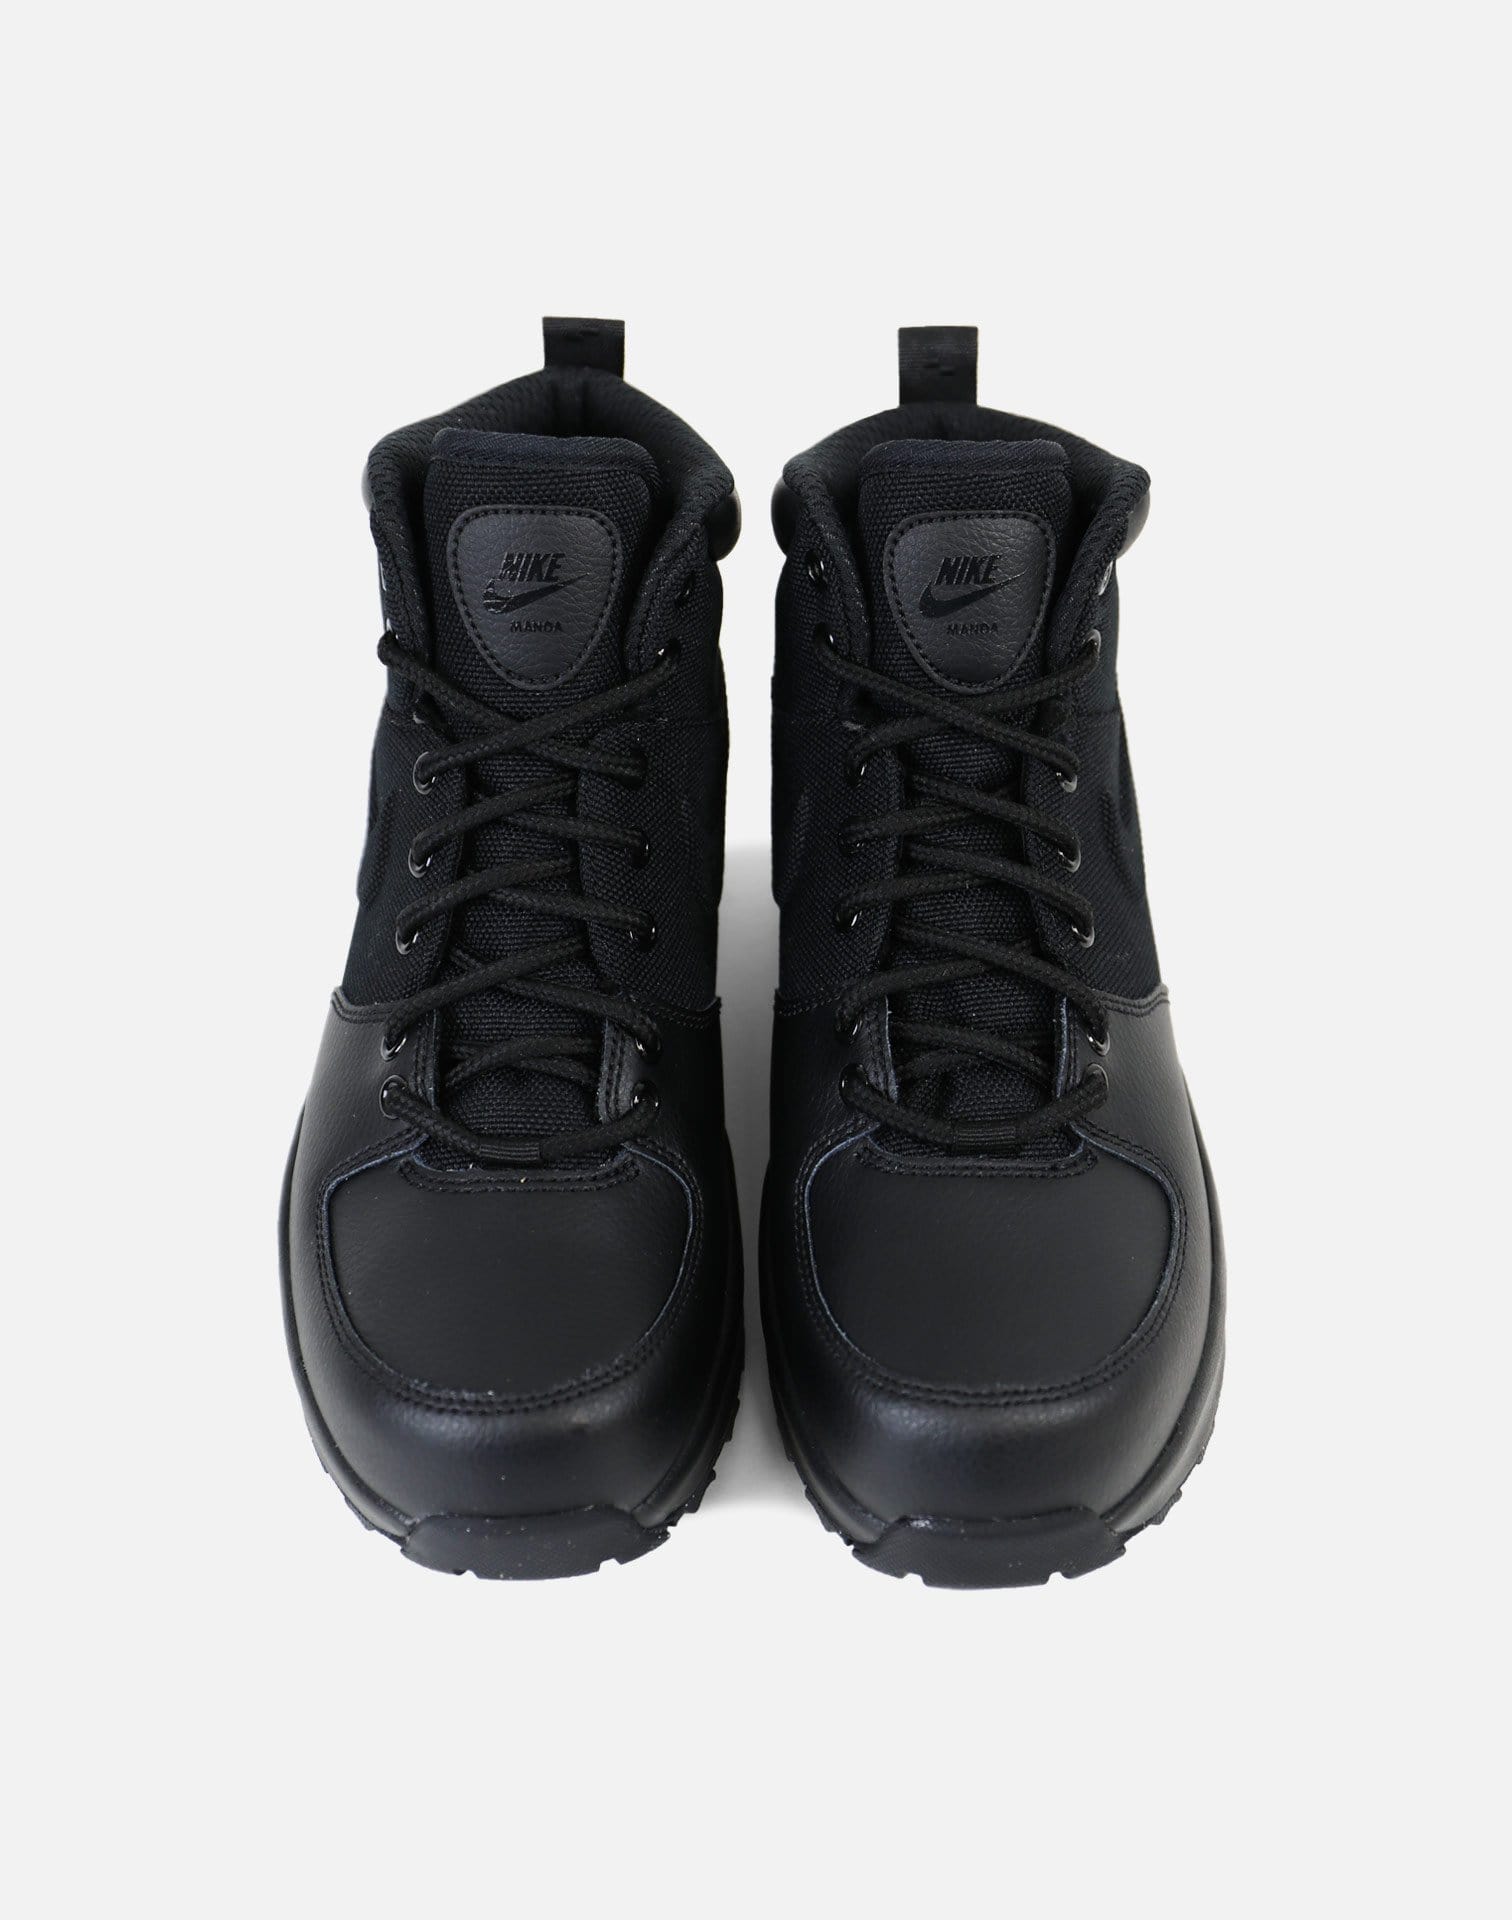 Nike Manoa Boots Grade-School (Black/Black)